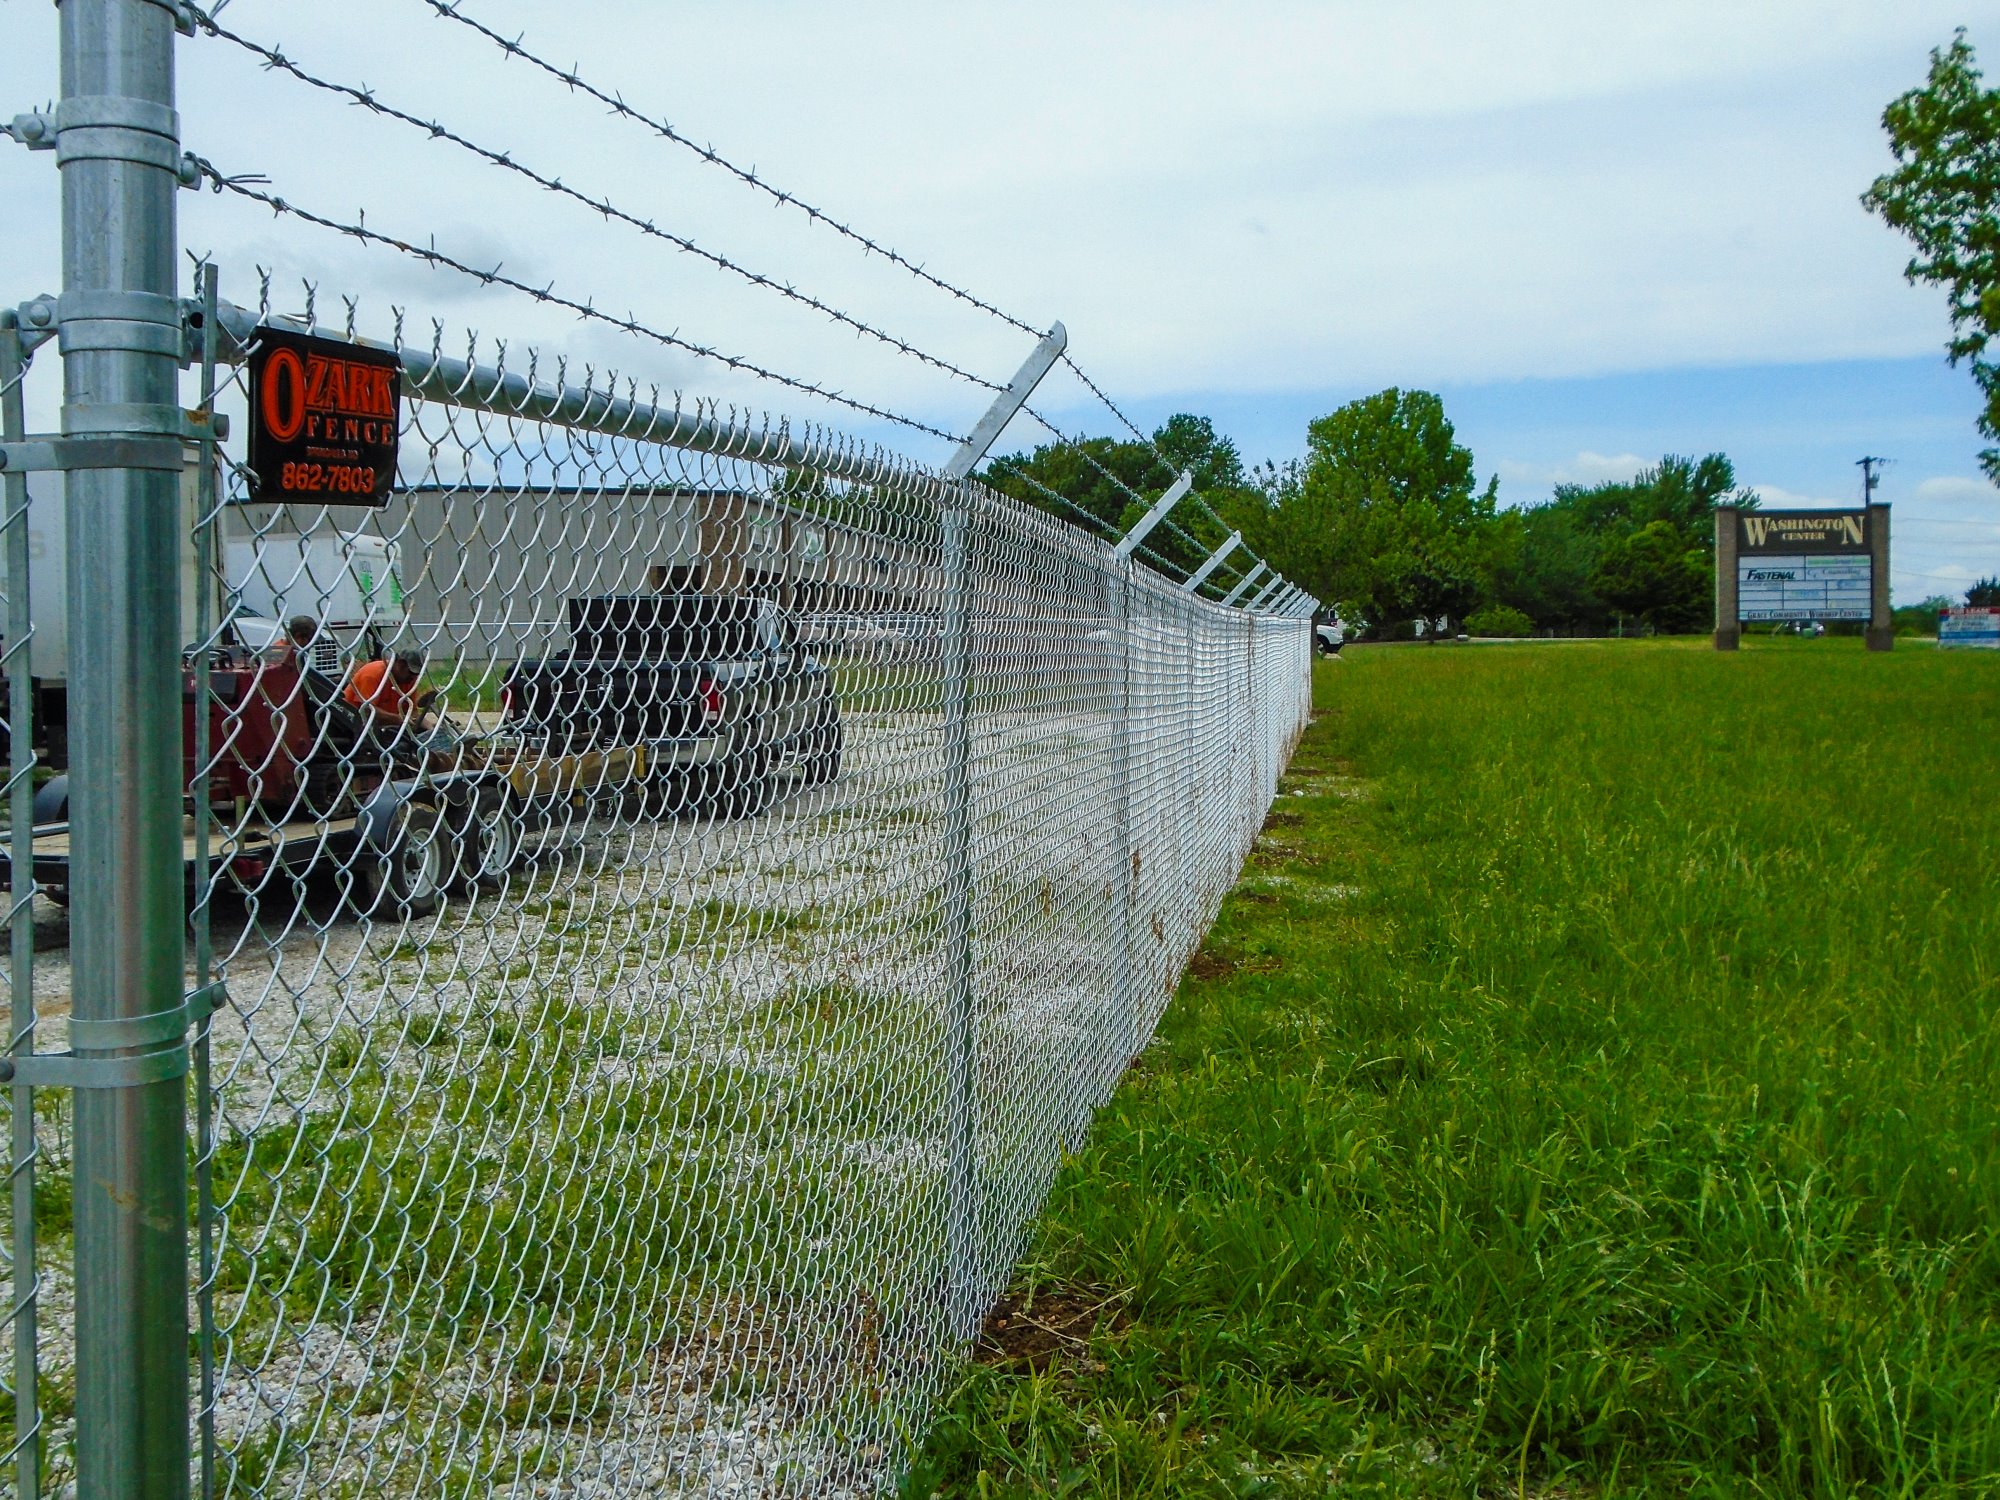 Halltown Missouri commercial fencing contractor